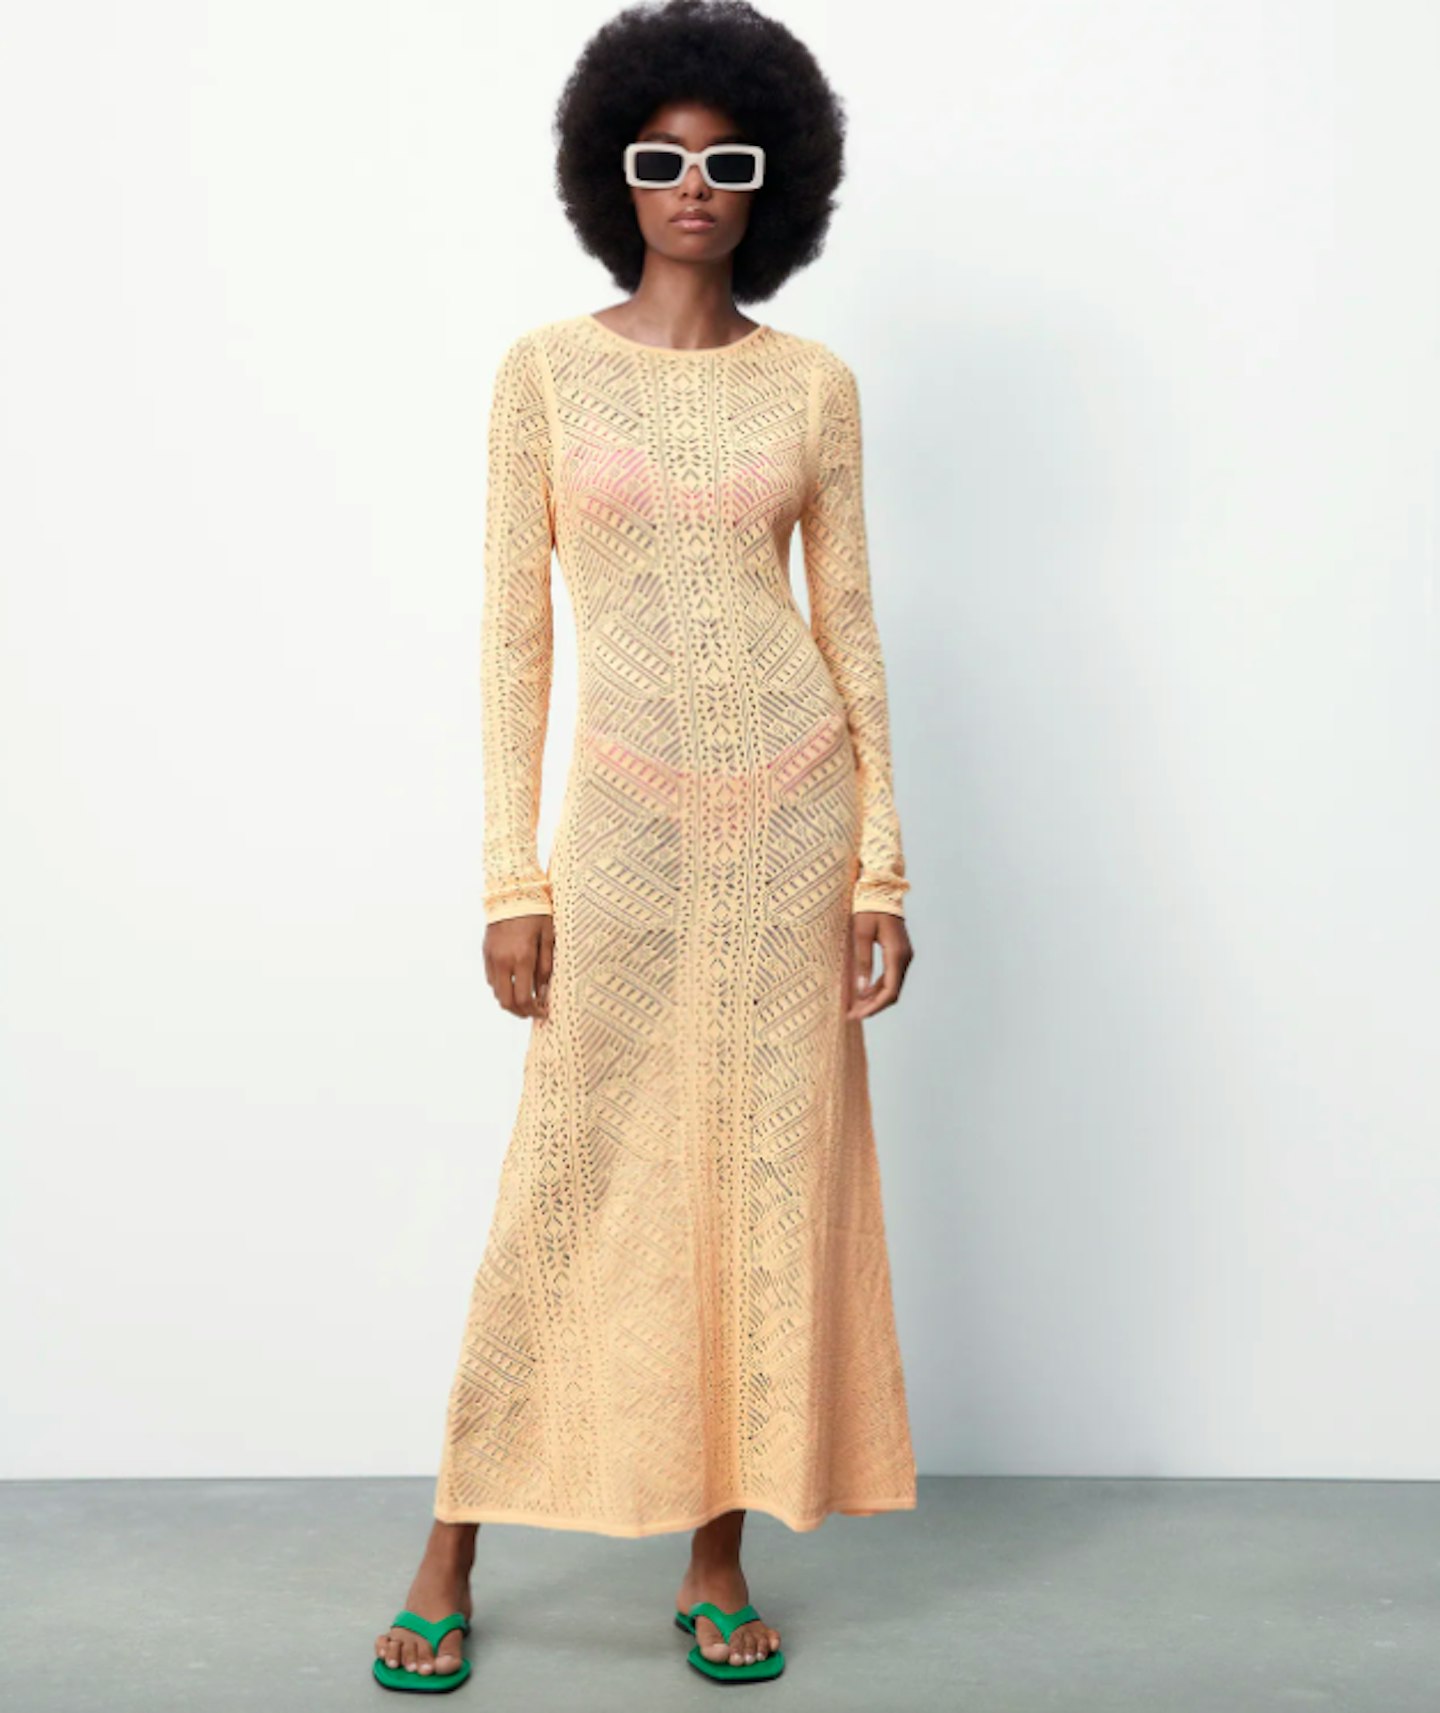 Zara, Pointelle Knit Dress, £49.99